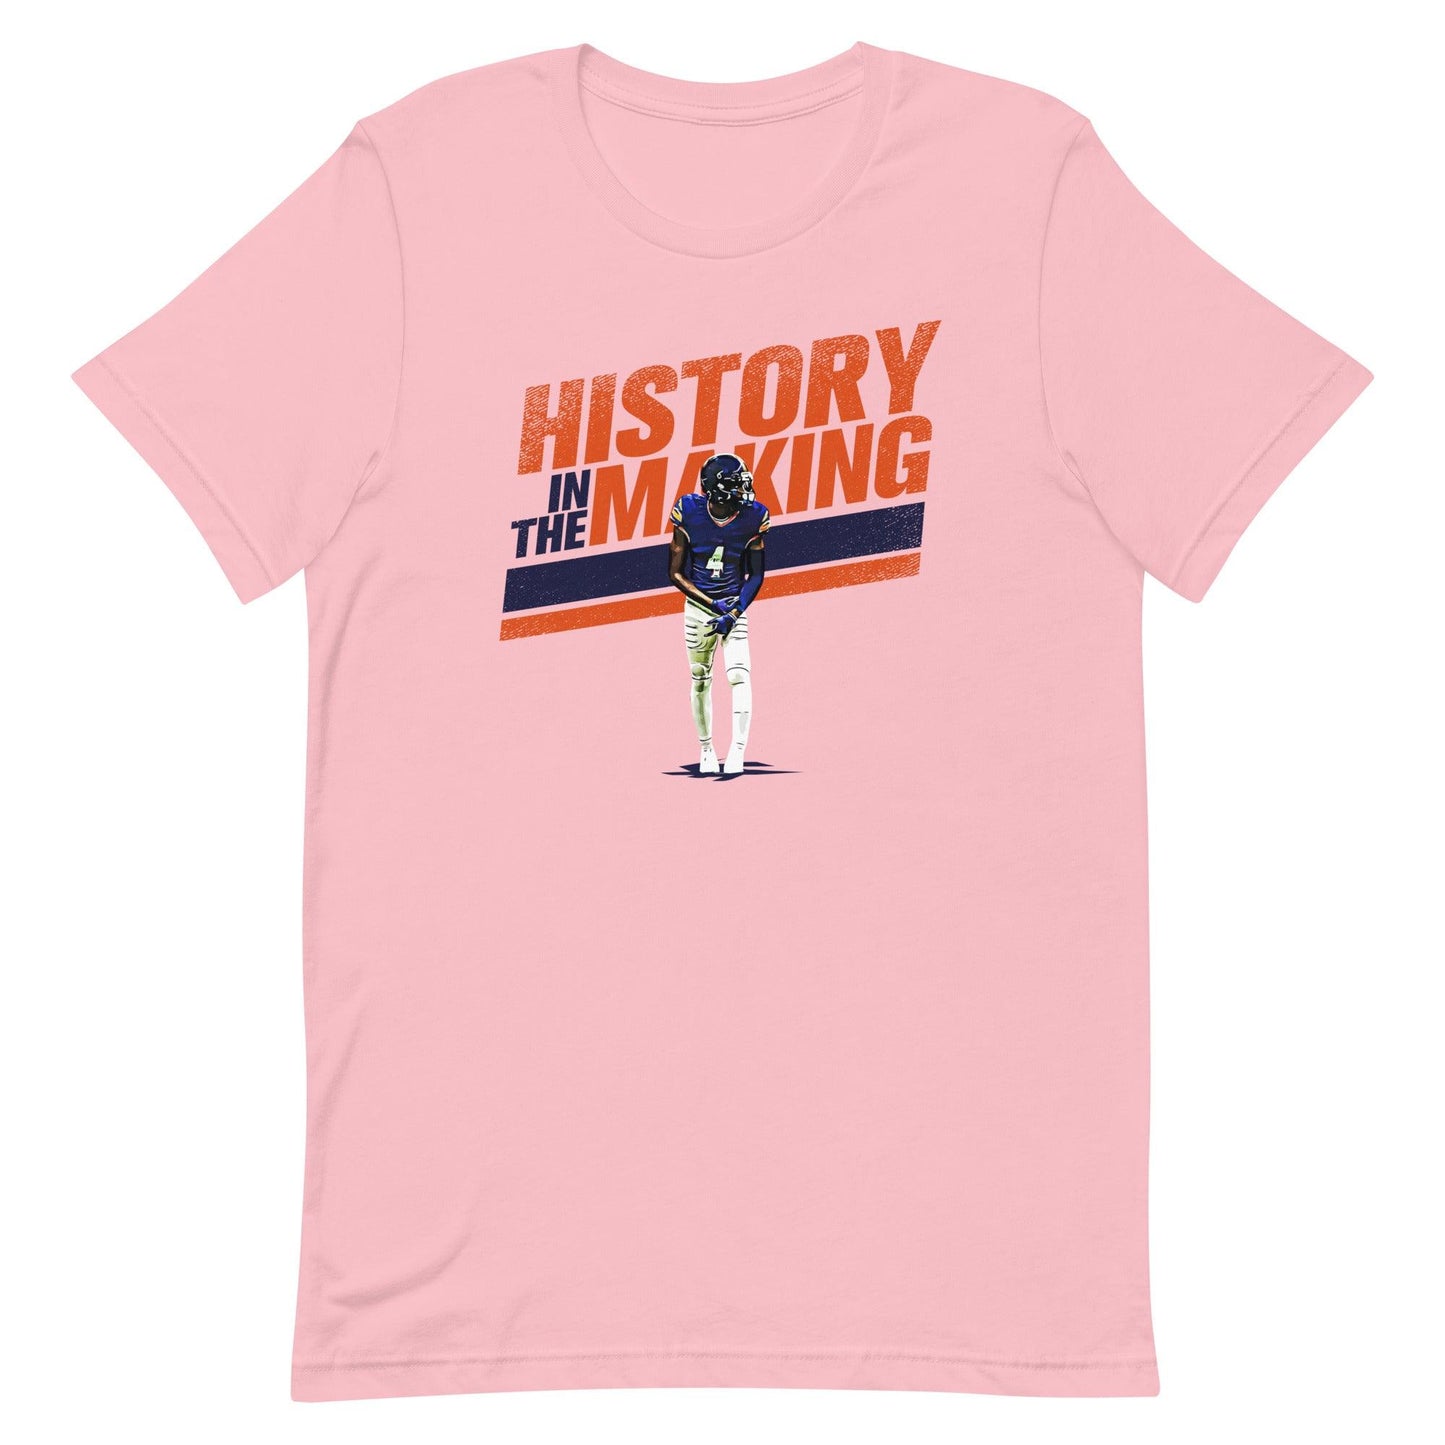 Zakhari Franklin "Make History" t-shirt - Fan Arch